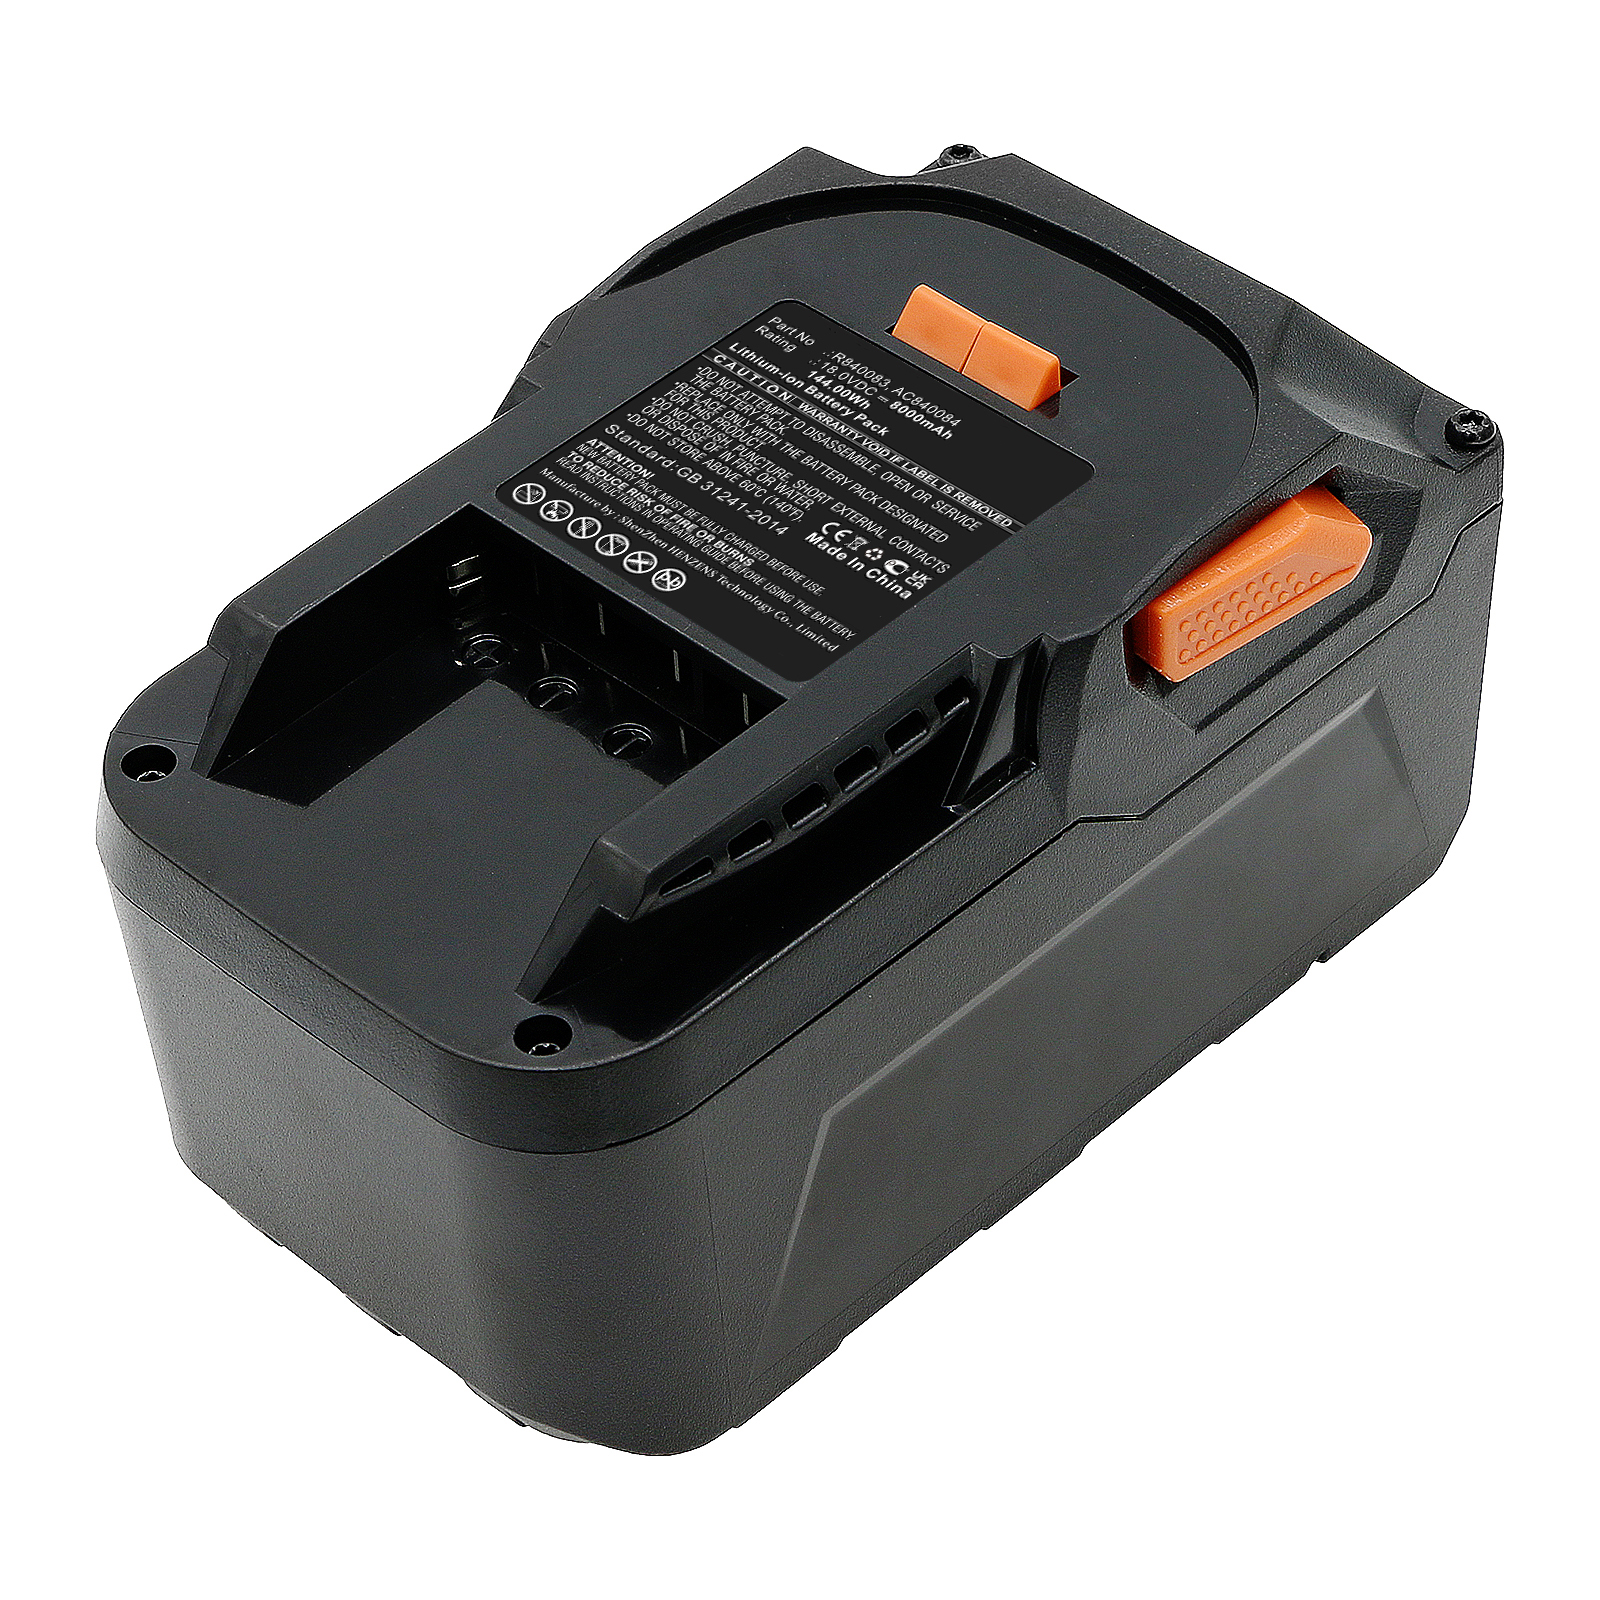 Batteries for RidgidPower Tool